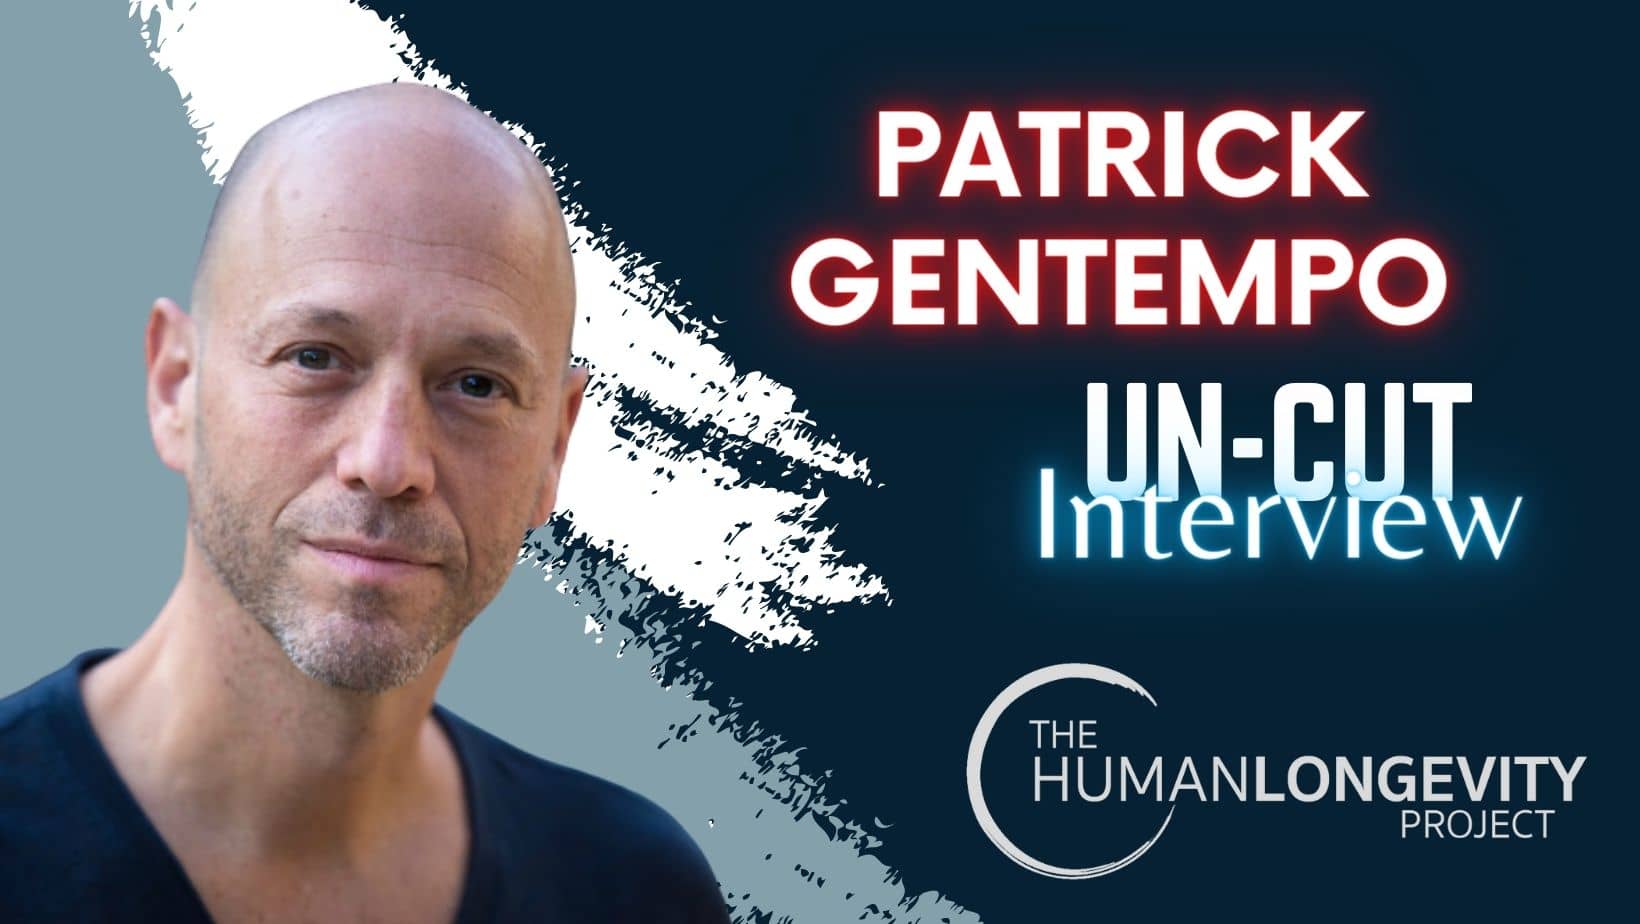 Human Longevity Project Uncut Interview With Dr. Patrick Gentempo